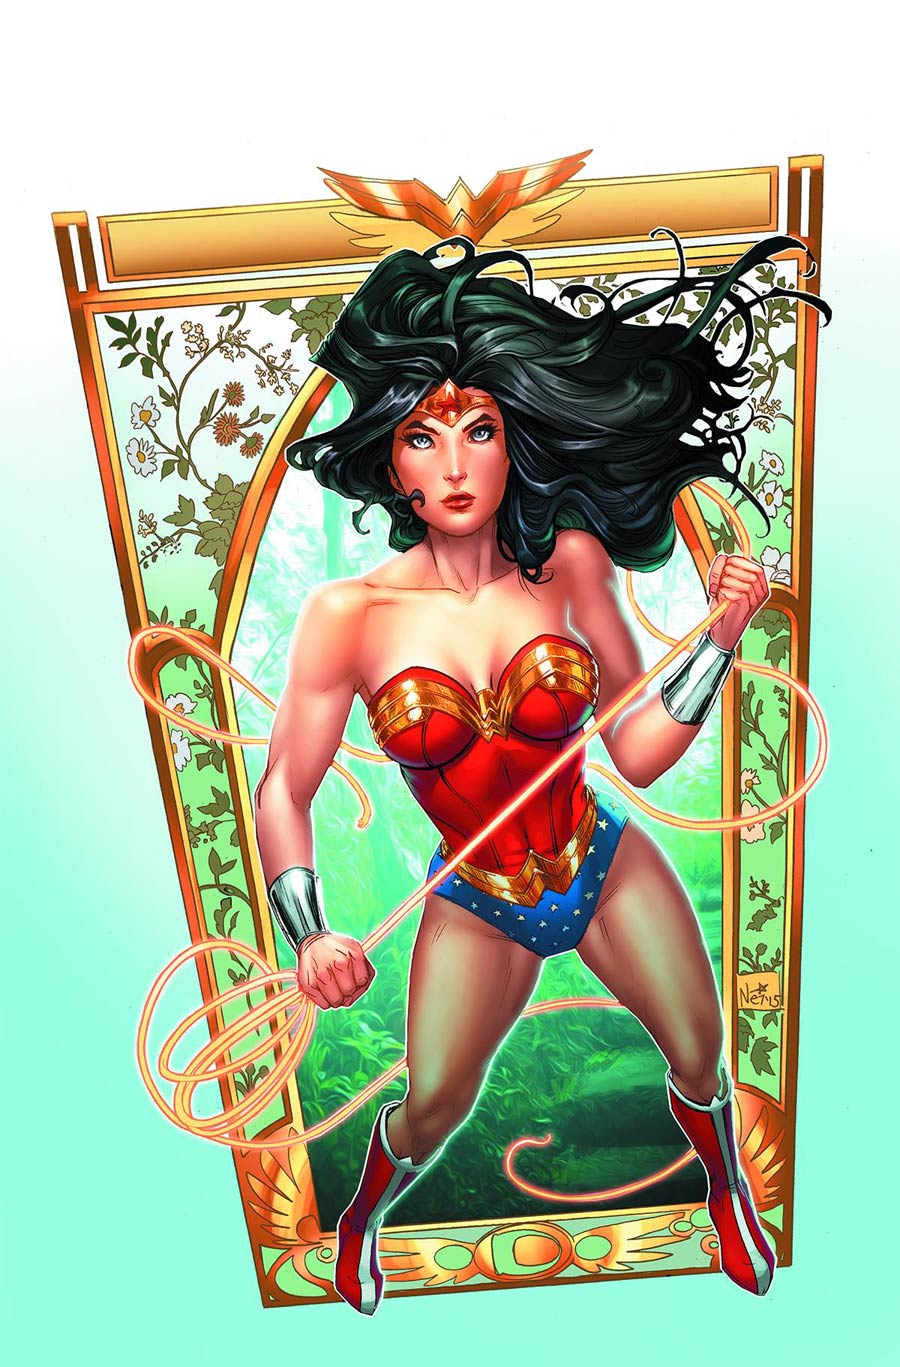 Sensation Comics Featuring Wonder Woman #14